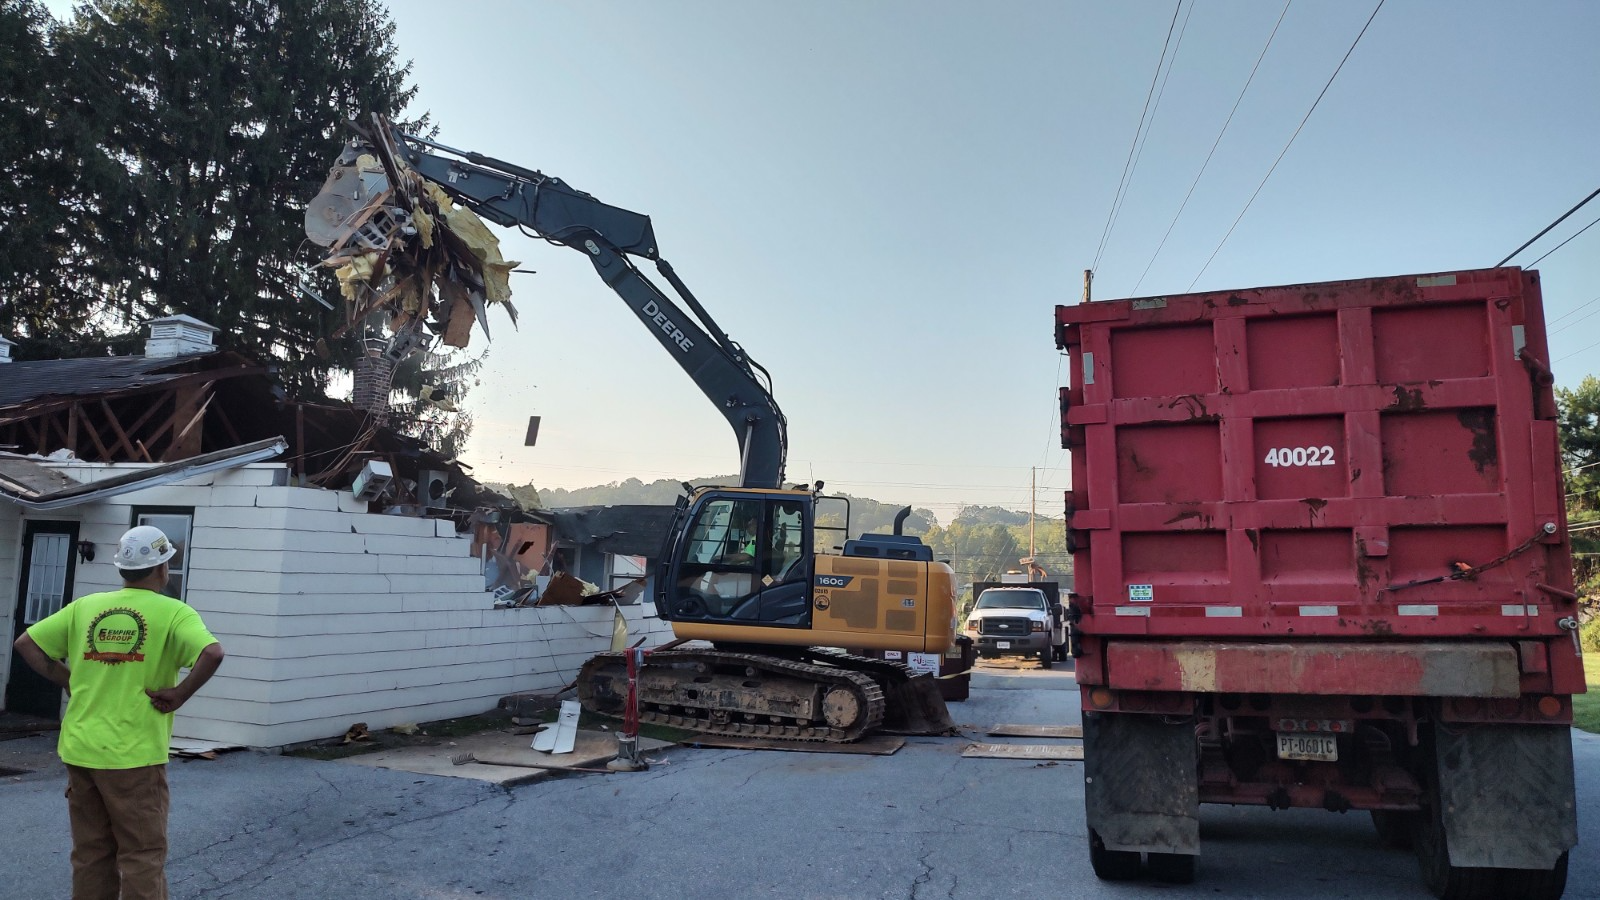 A bulldozer is demolishing a building next to a dump truck.